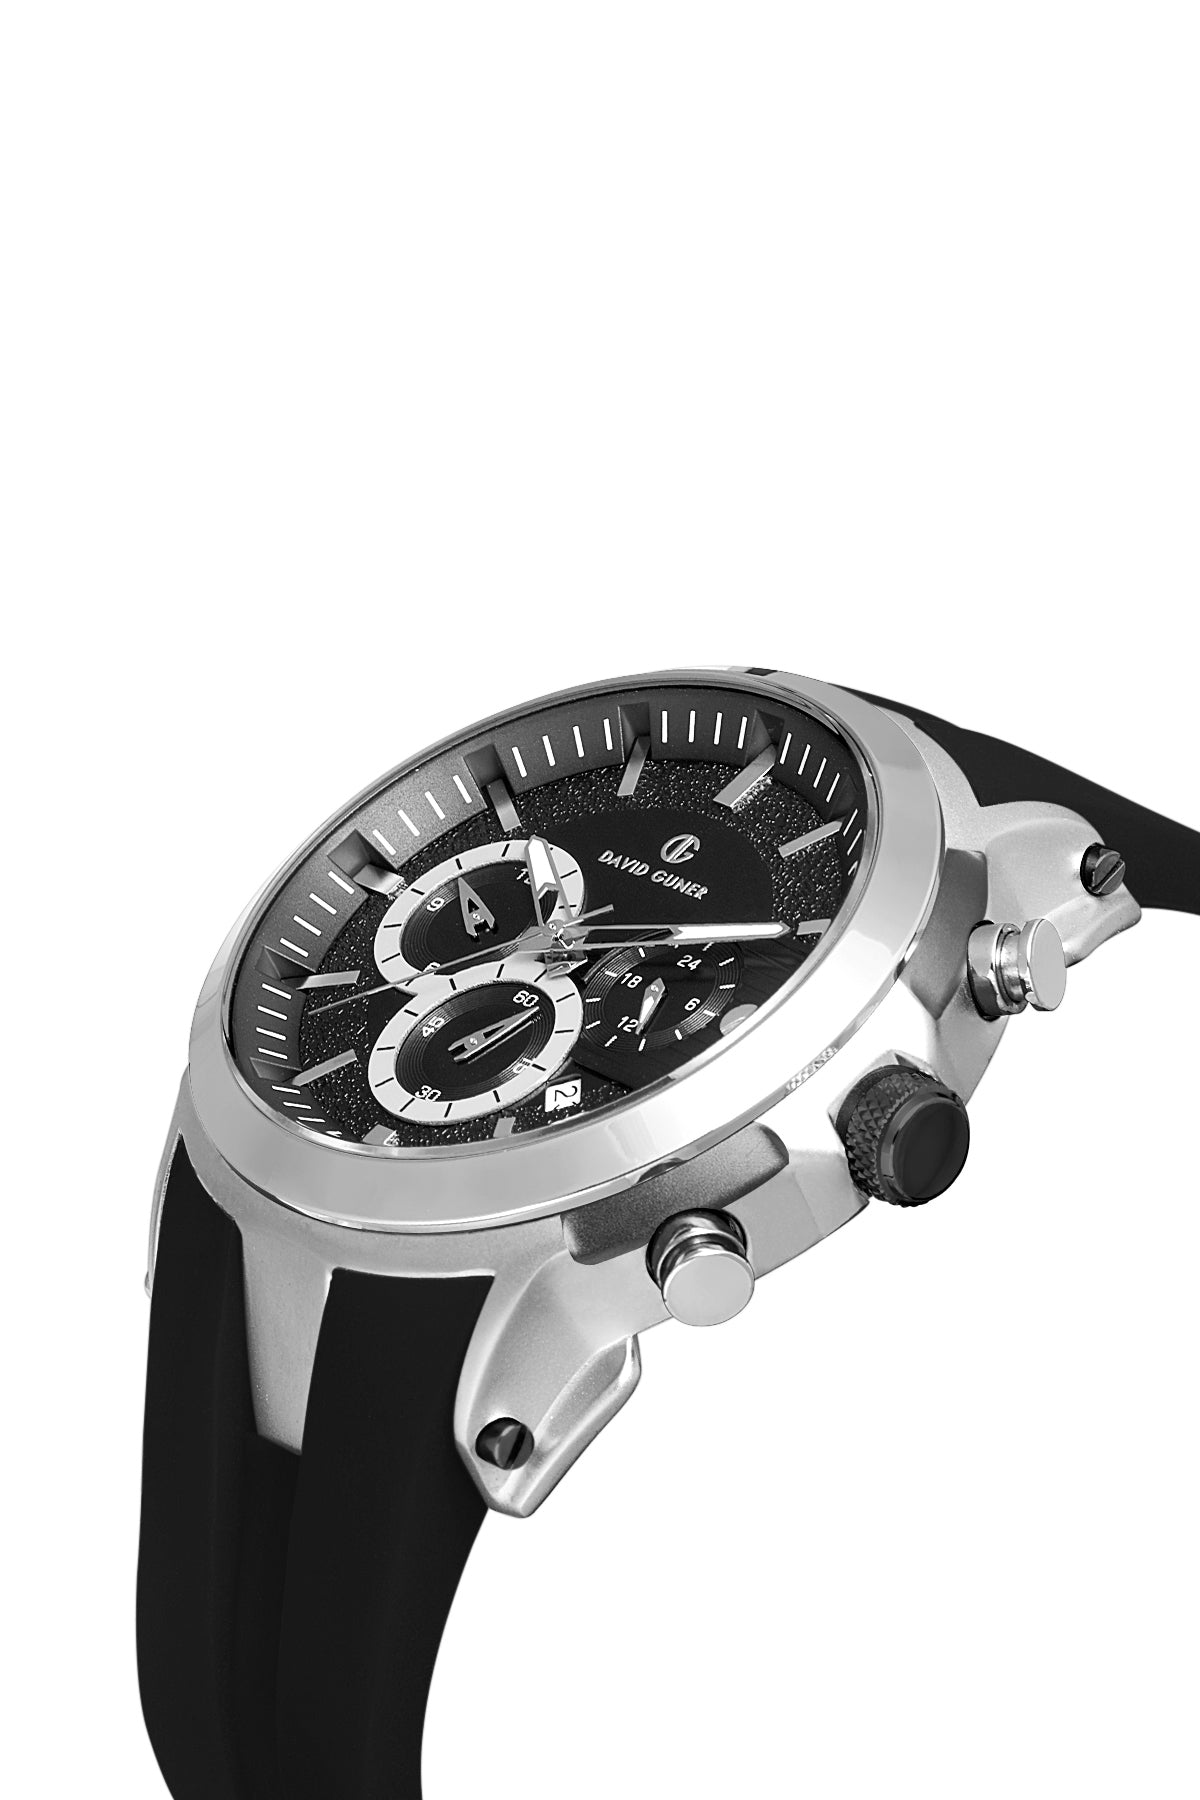 DAVID GUNER Silver Black Plated Multi Function Men's Wristwatch